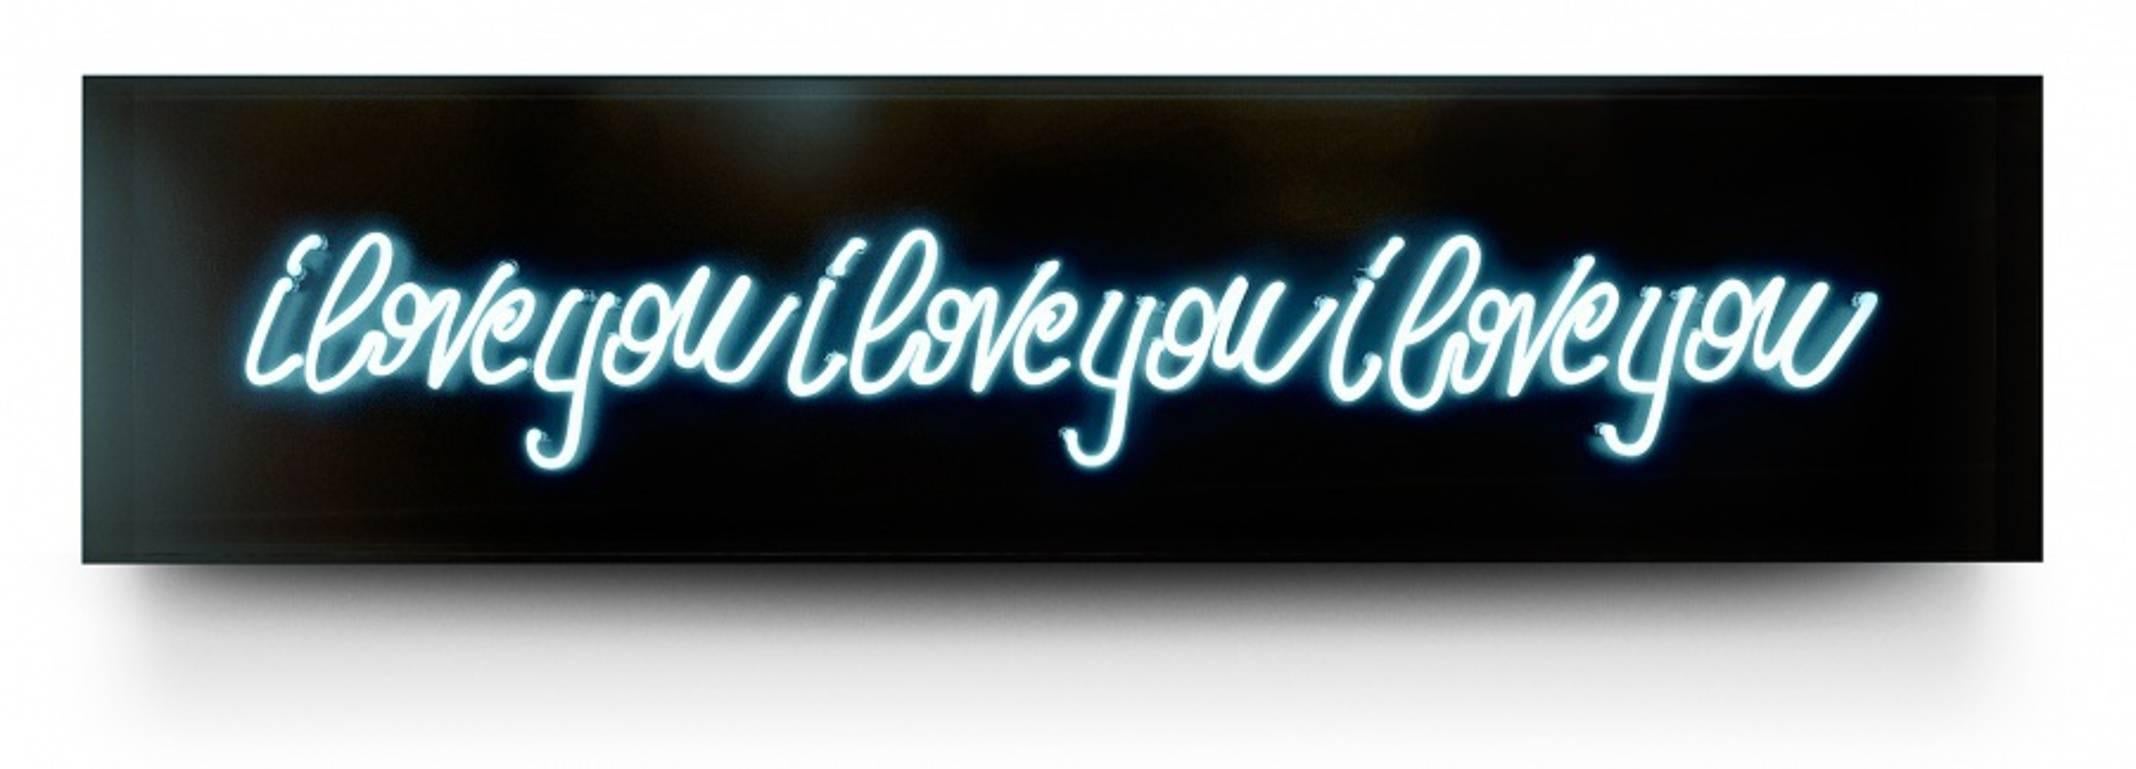 I Love You - Neon Light Installation  - Mixed Media Art by David Drebin